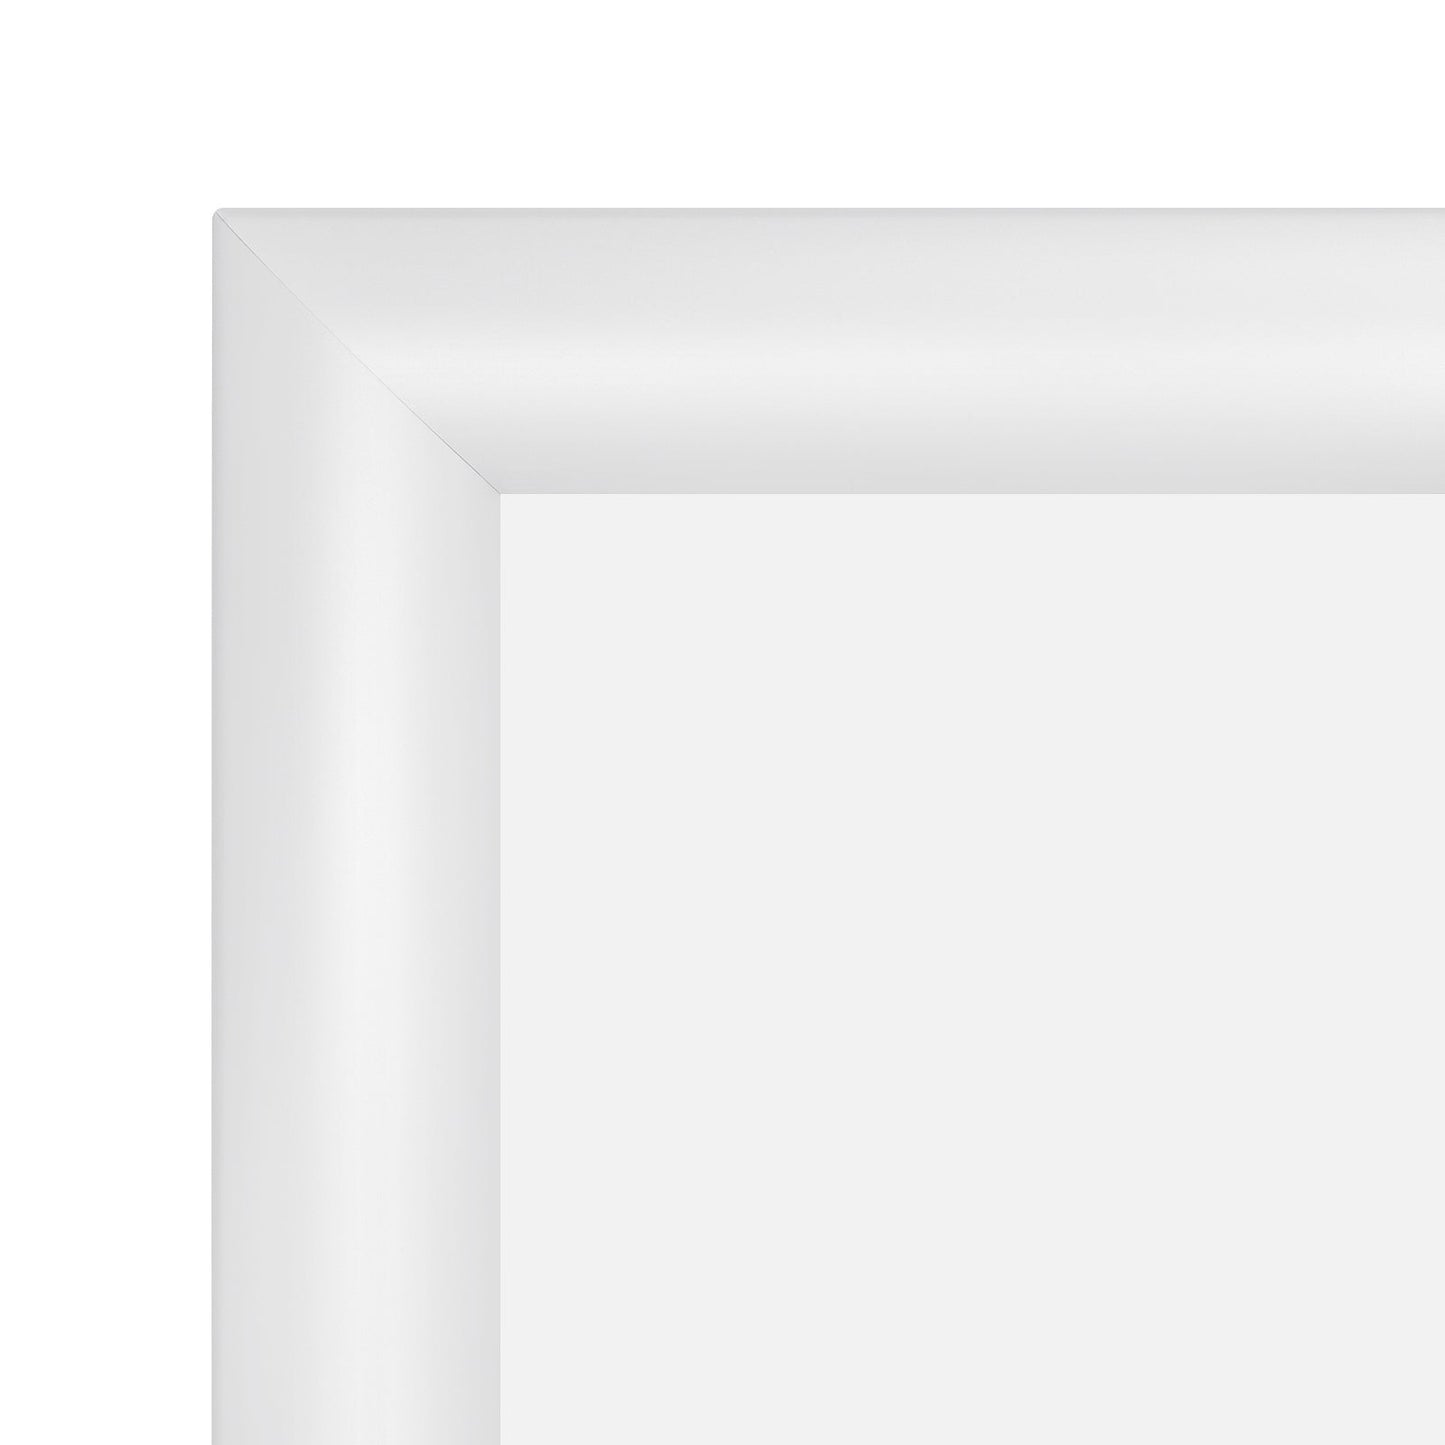 13x21 White SnapeZo® Snap Frame - 1.2" Profile - Snap Frames Direct